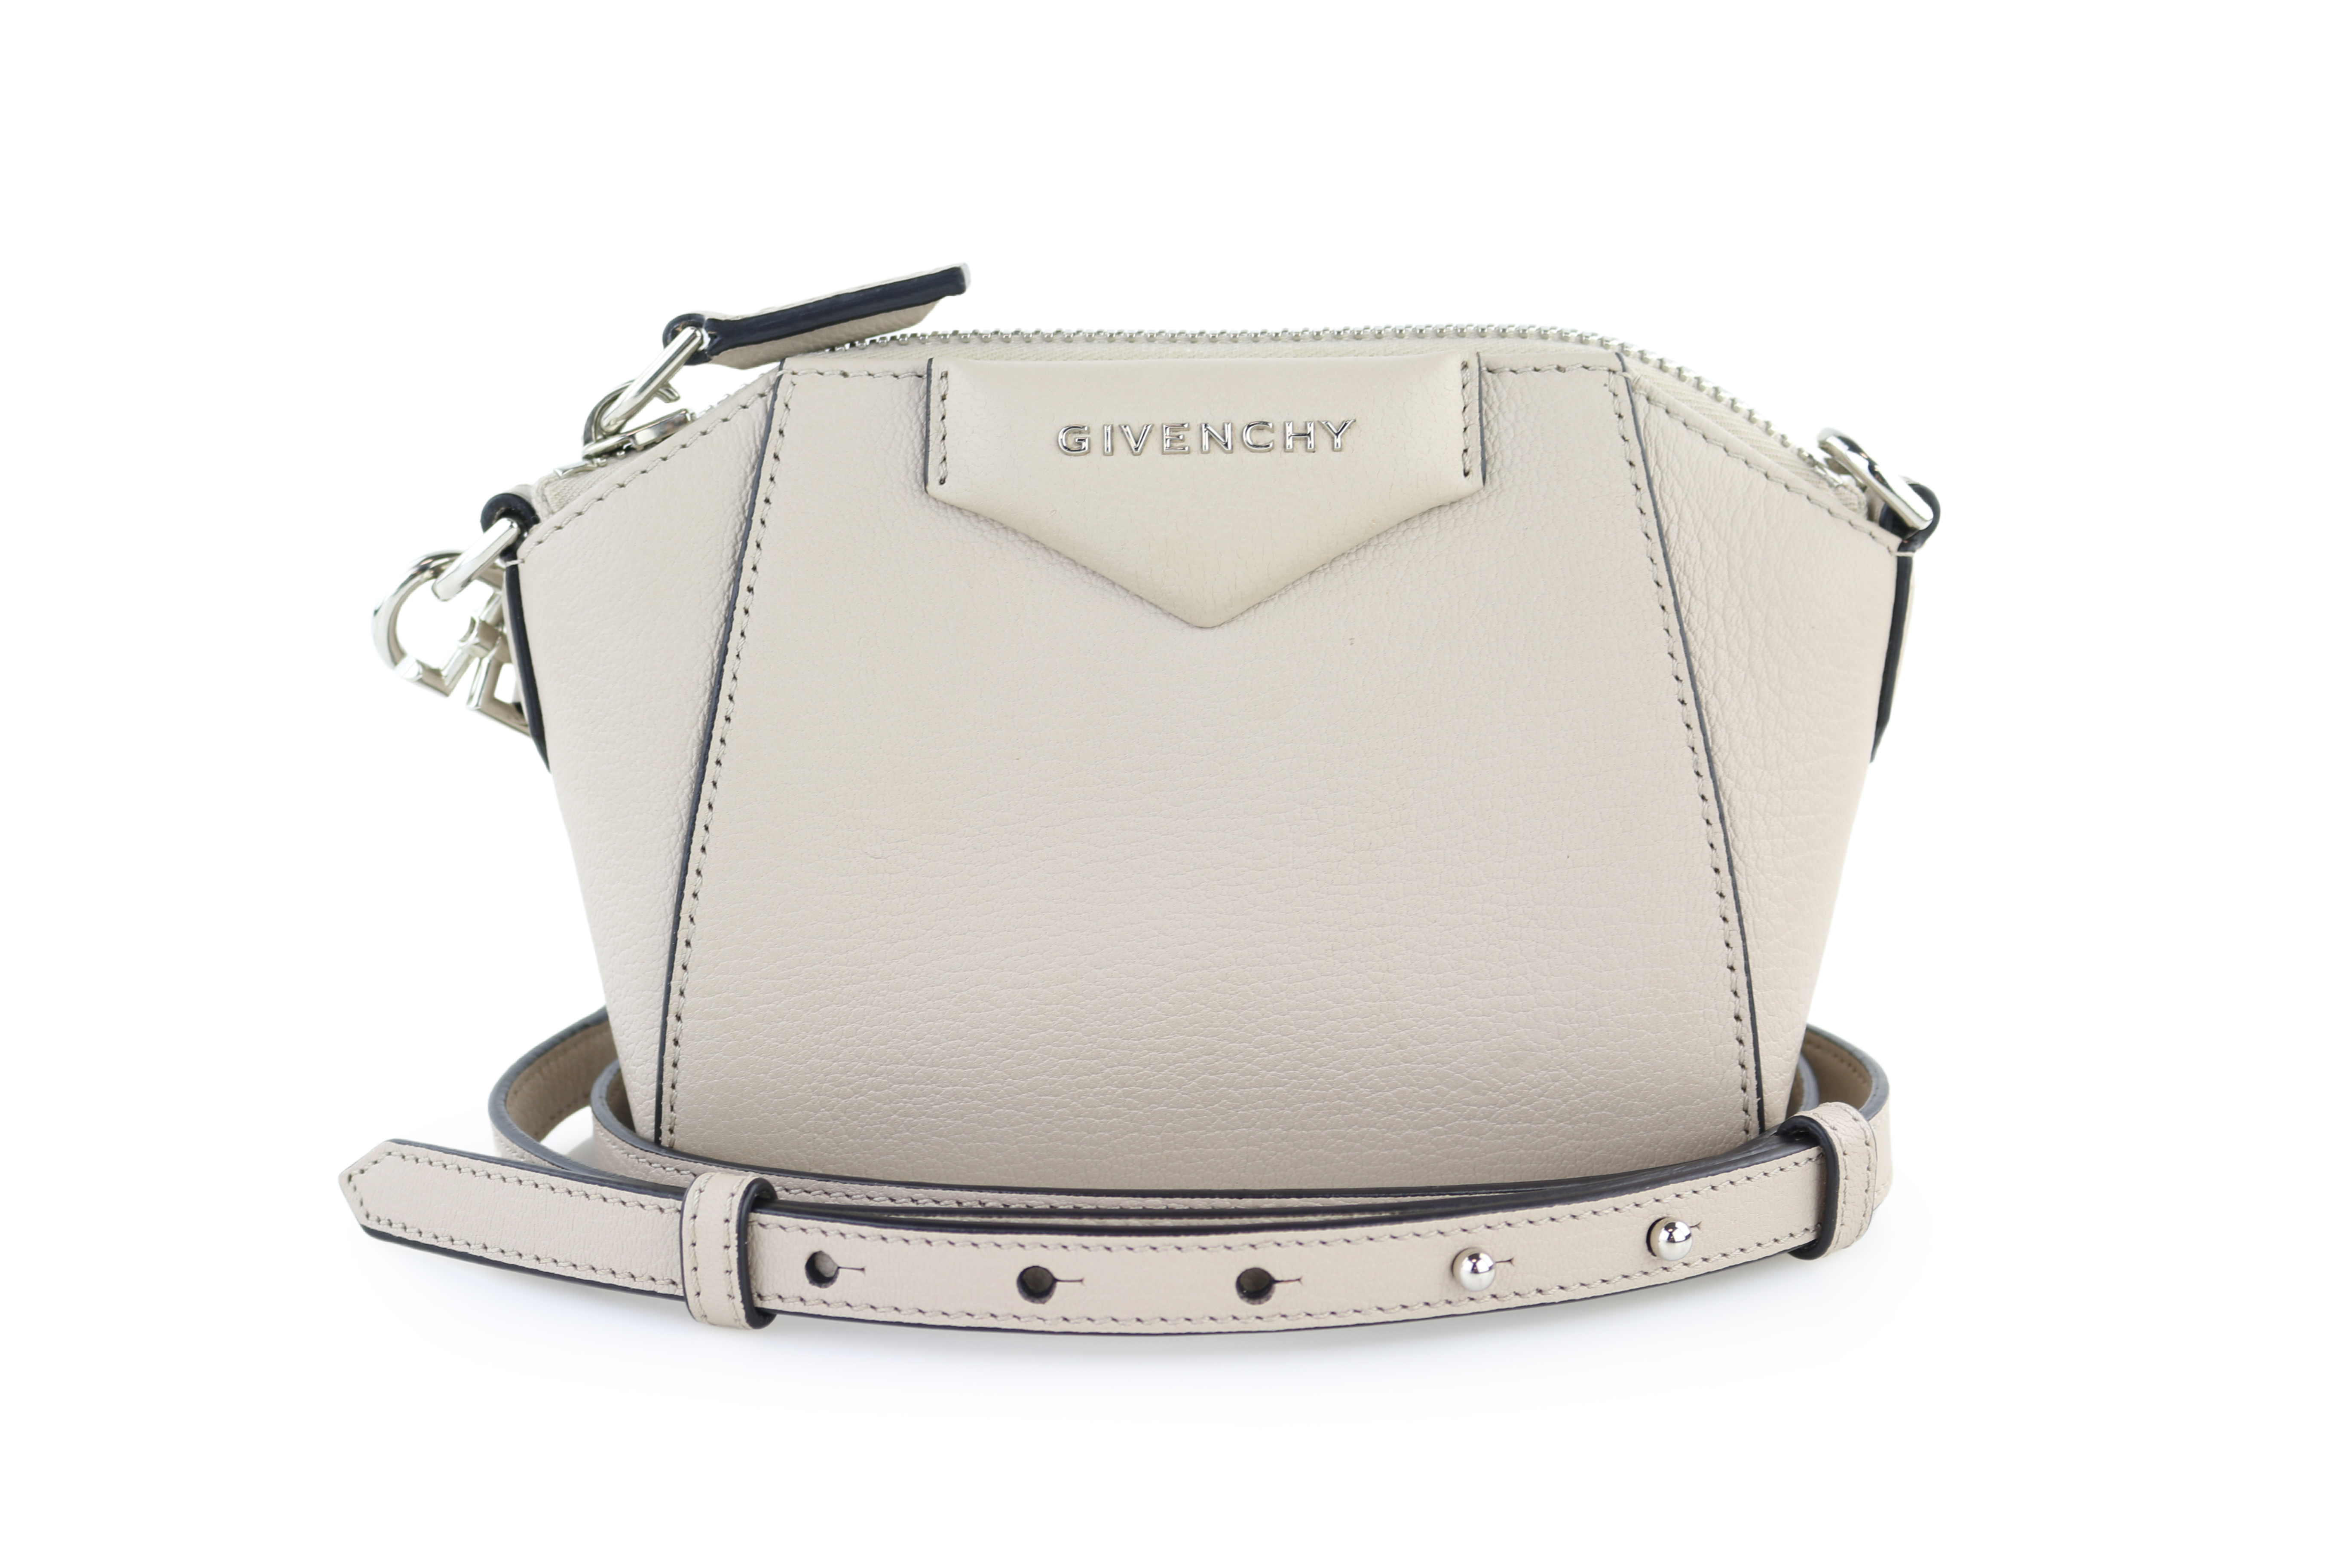 Givenchy 'Antigona Nano' shoulder bag, Women's Bags